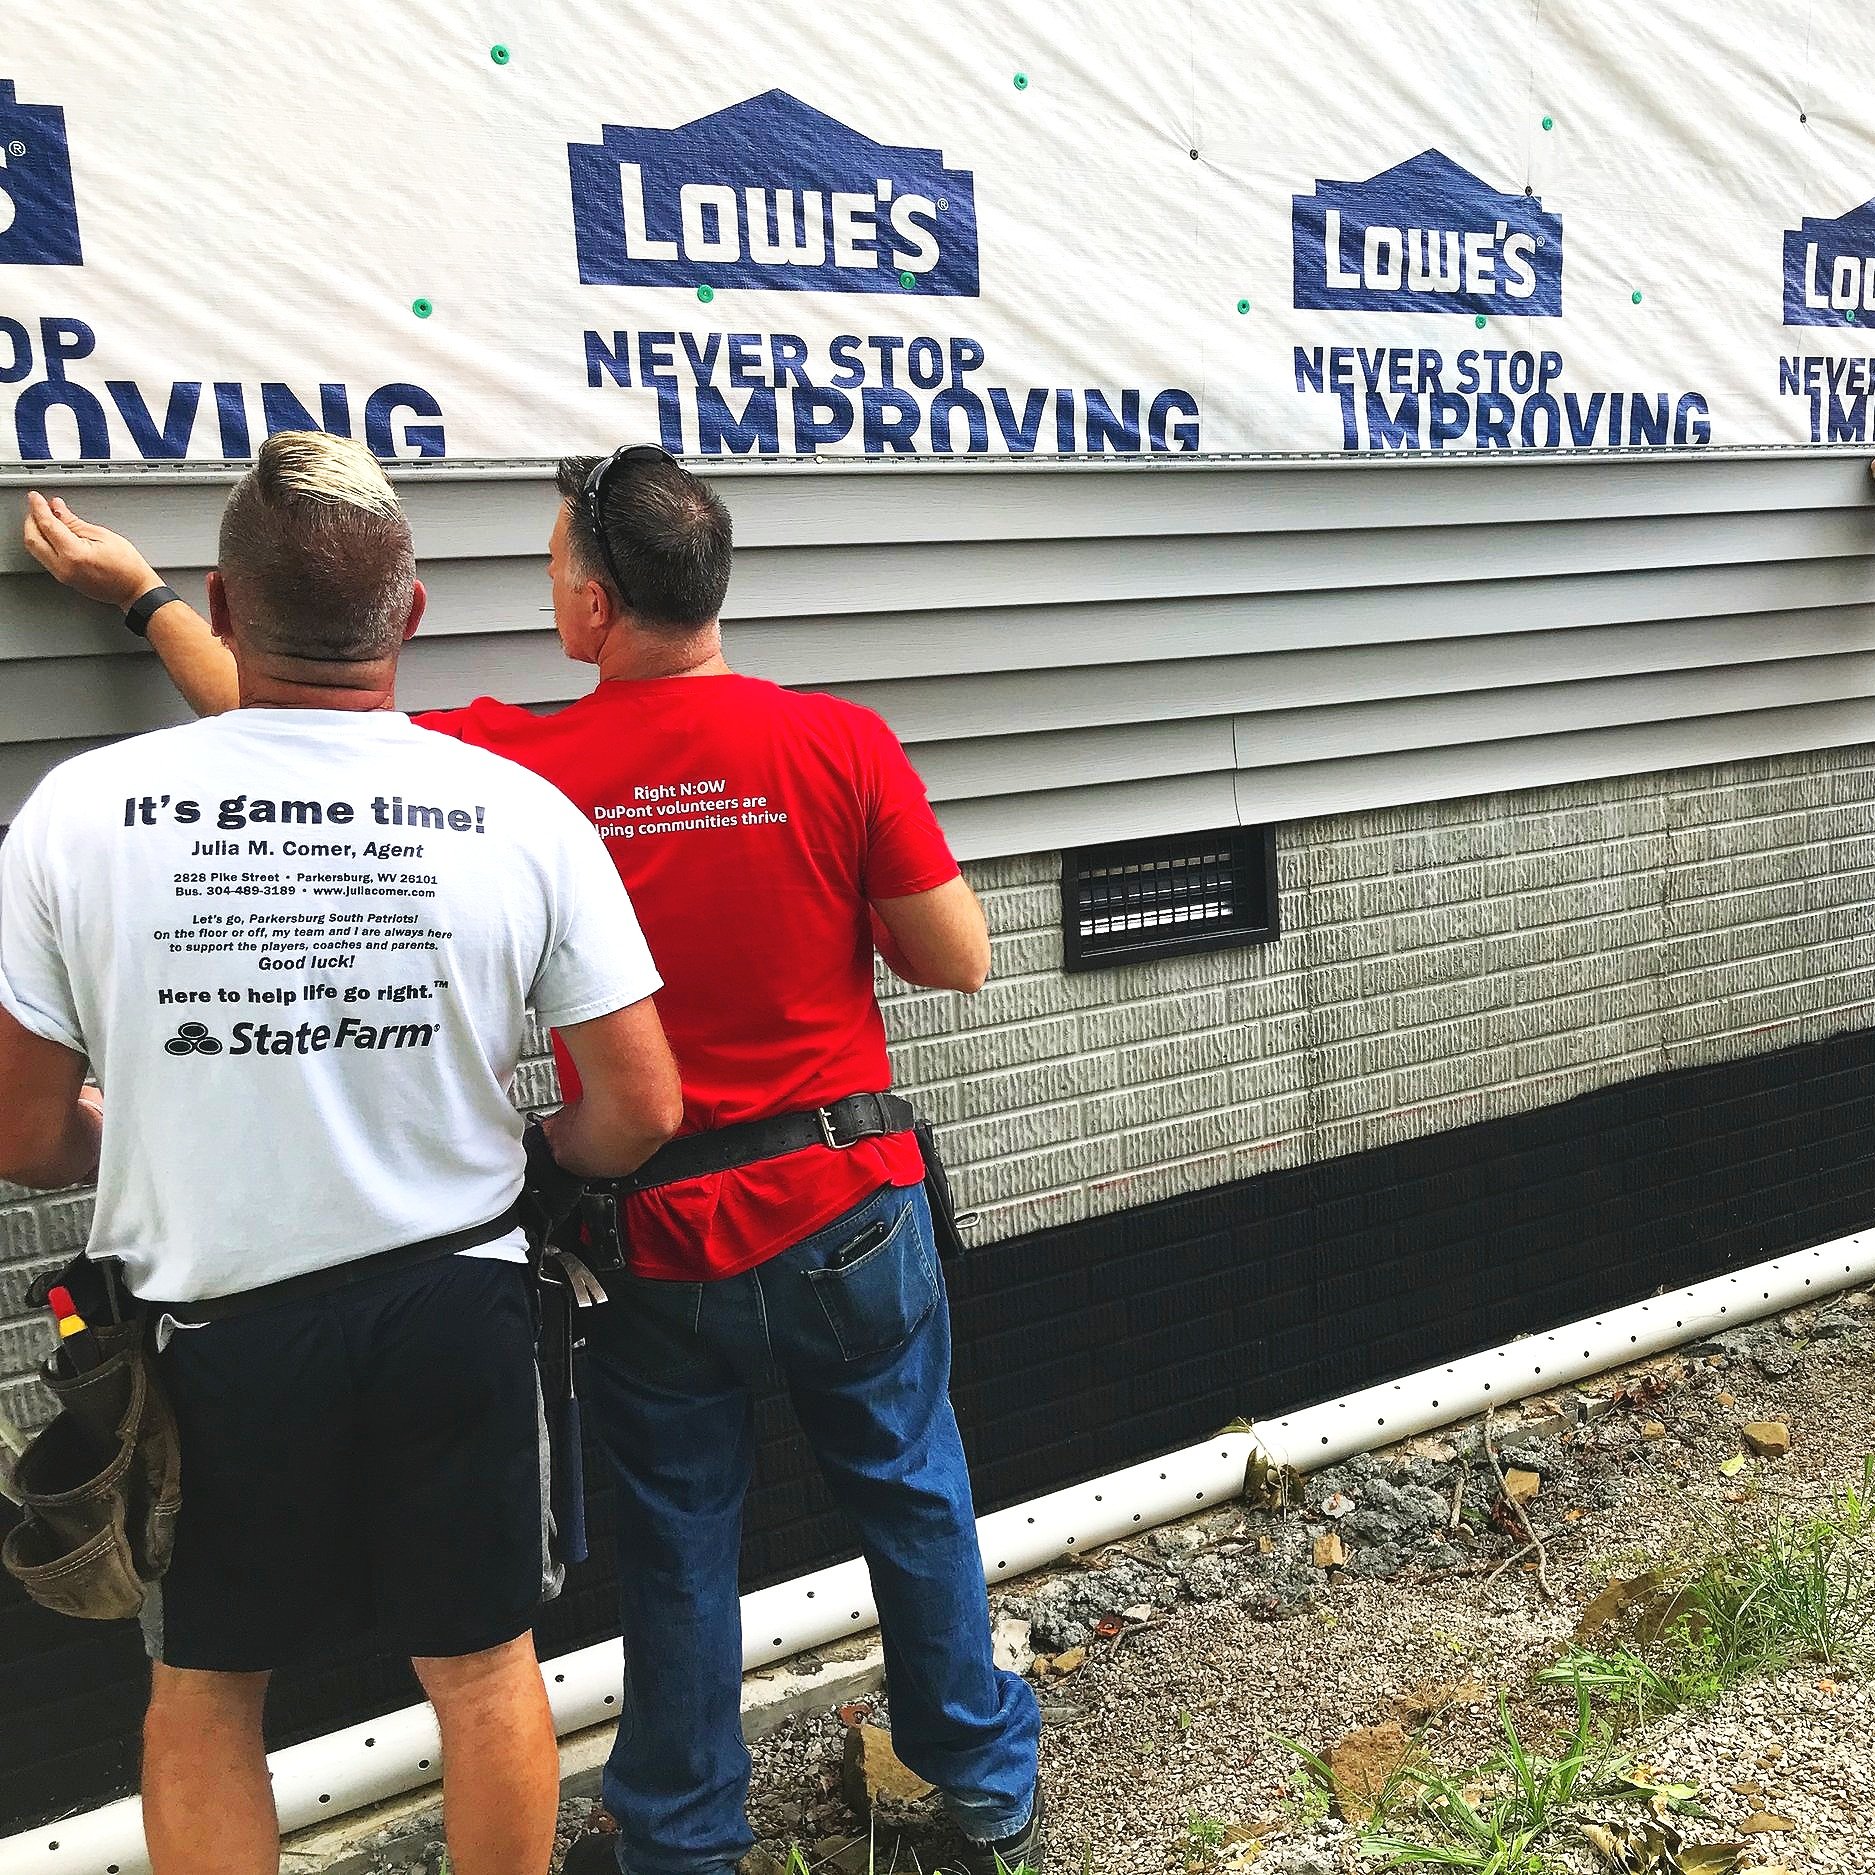 DuPont volunteers installing siding